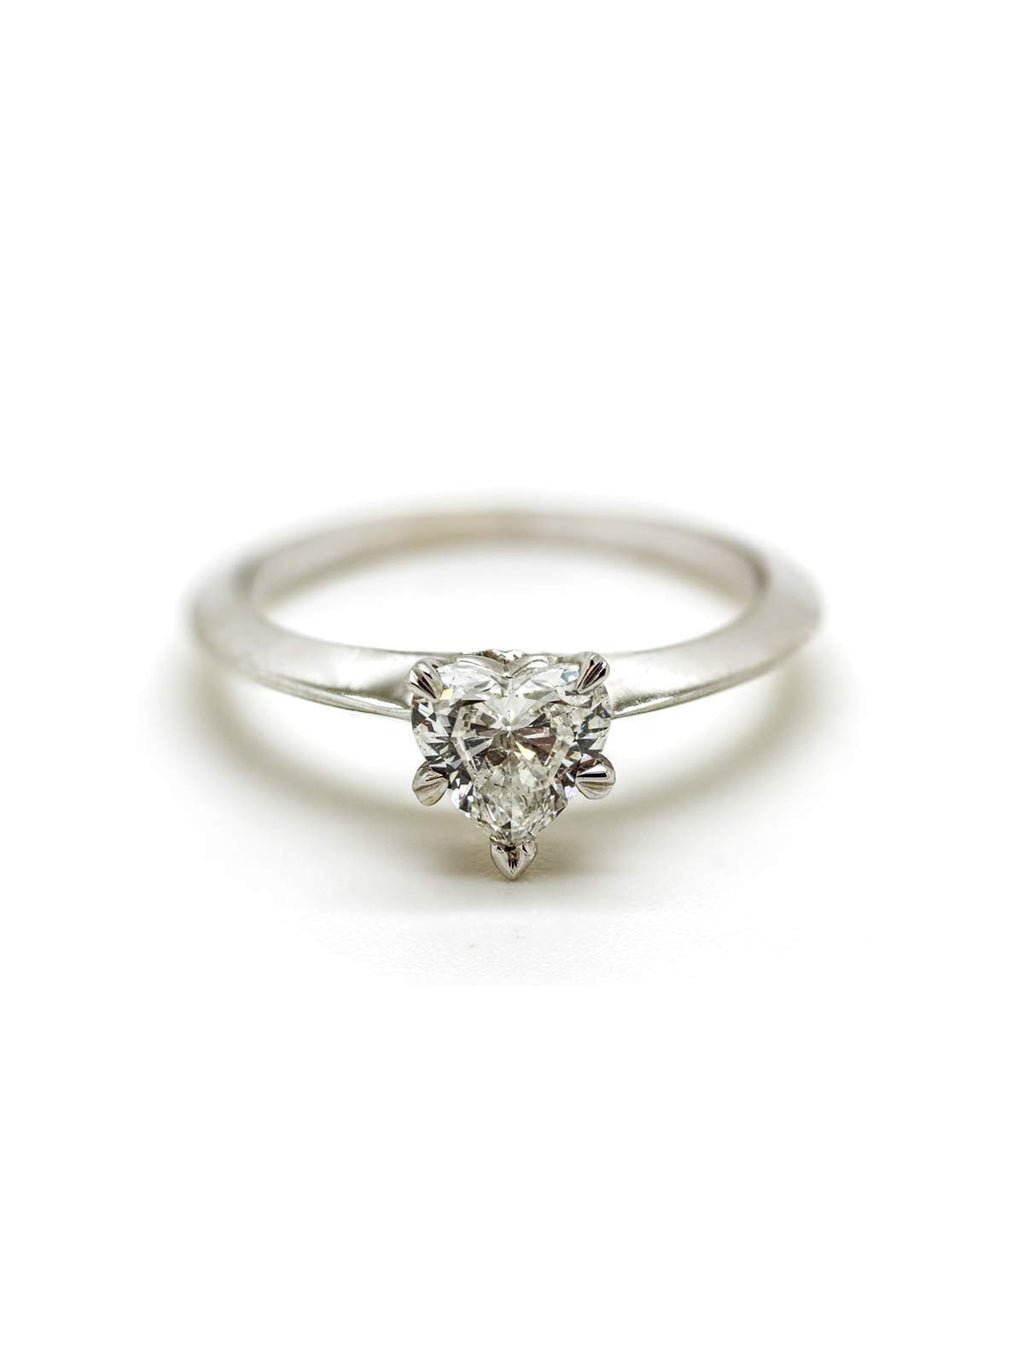 Yaf Sparkle, Heart Shaped Diamond Ring